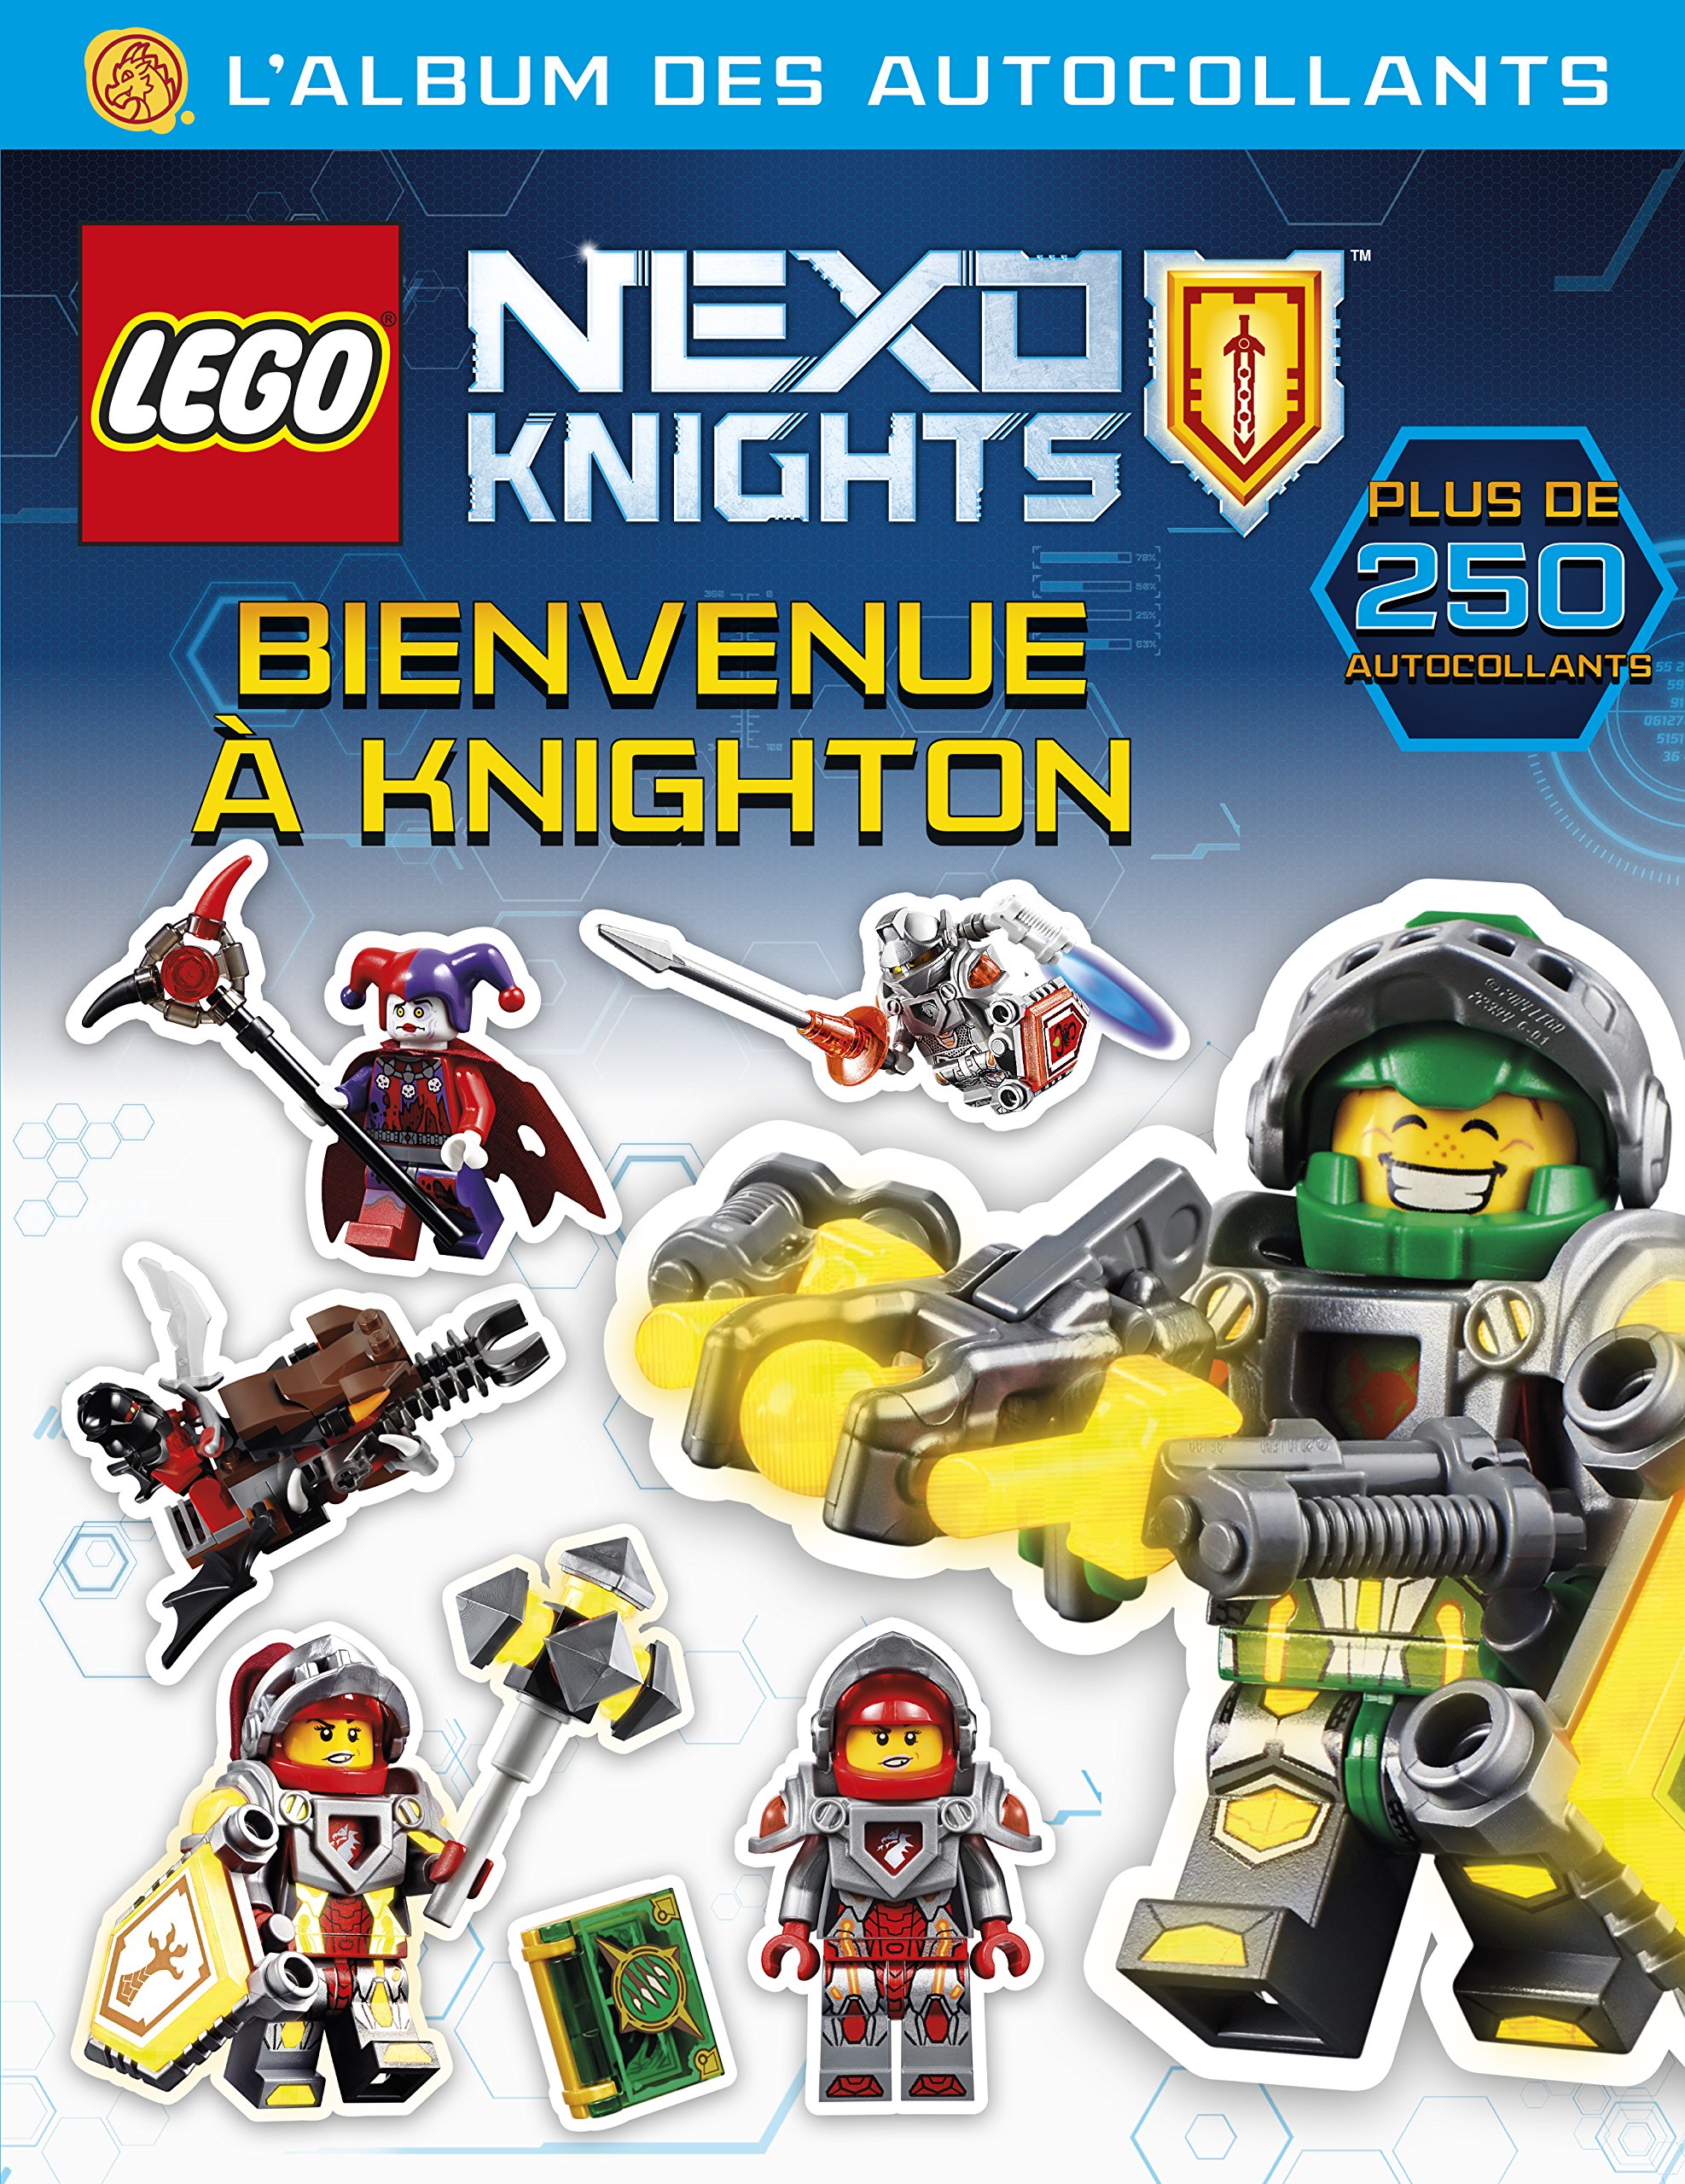 lego_nexo_knights_autocol